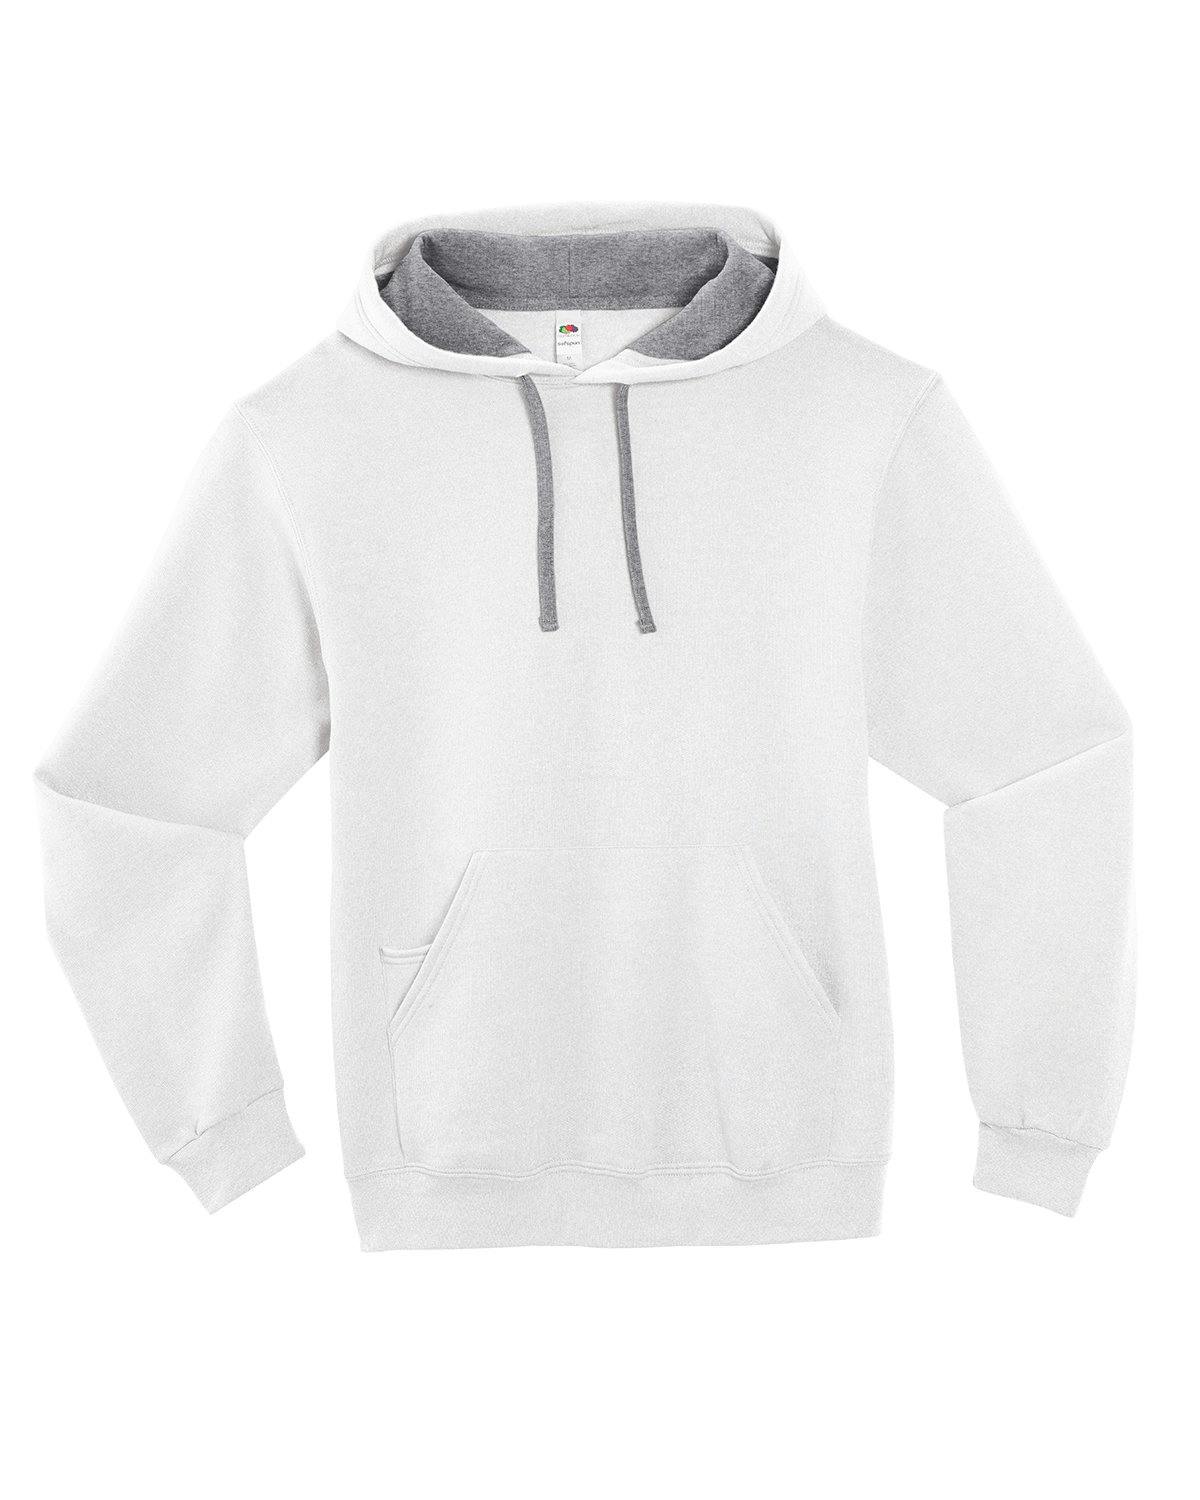 Image for Adult SofSpun® Hooded Sweatshirt